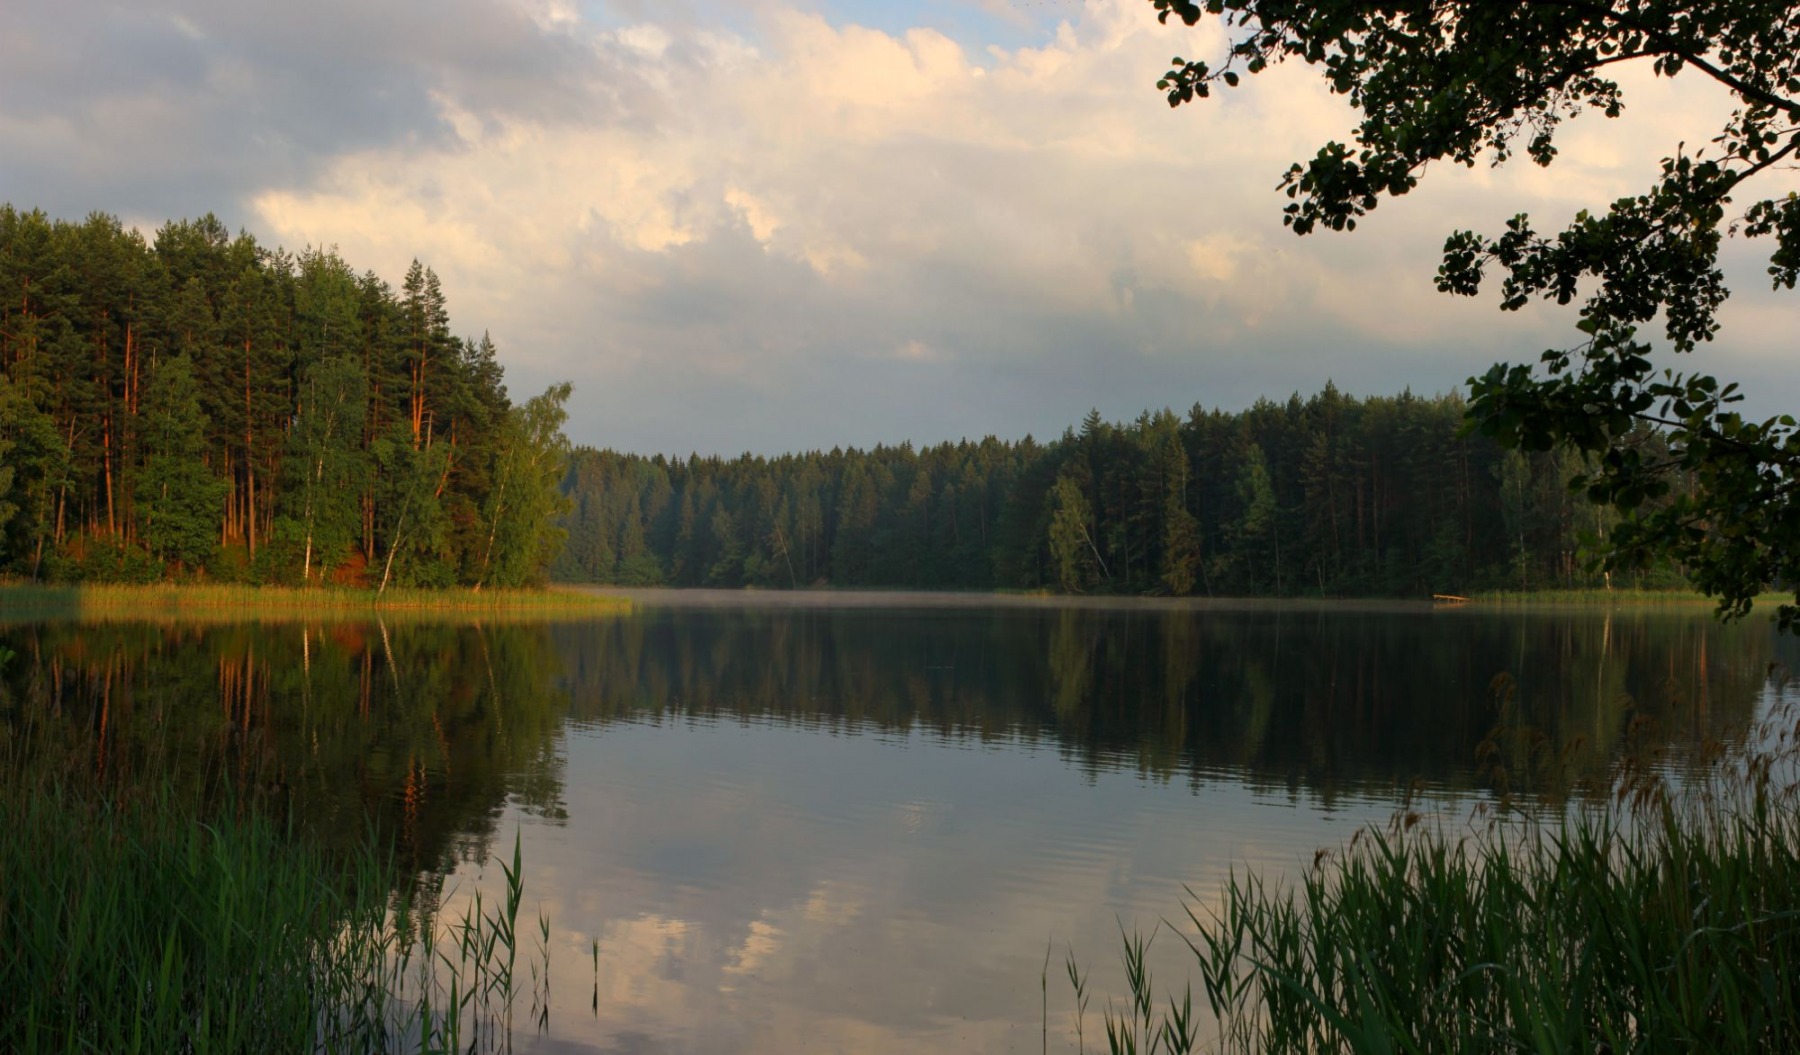 озеро Кривое | Фотограф Виталий Некрашевич | foto.by фото.бай